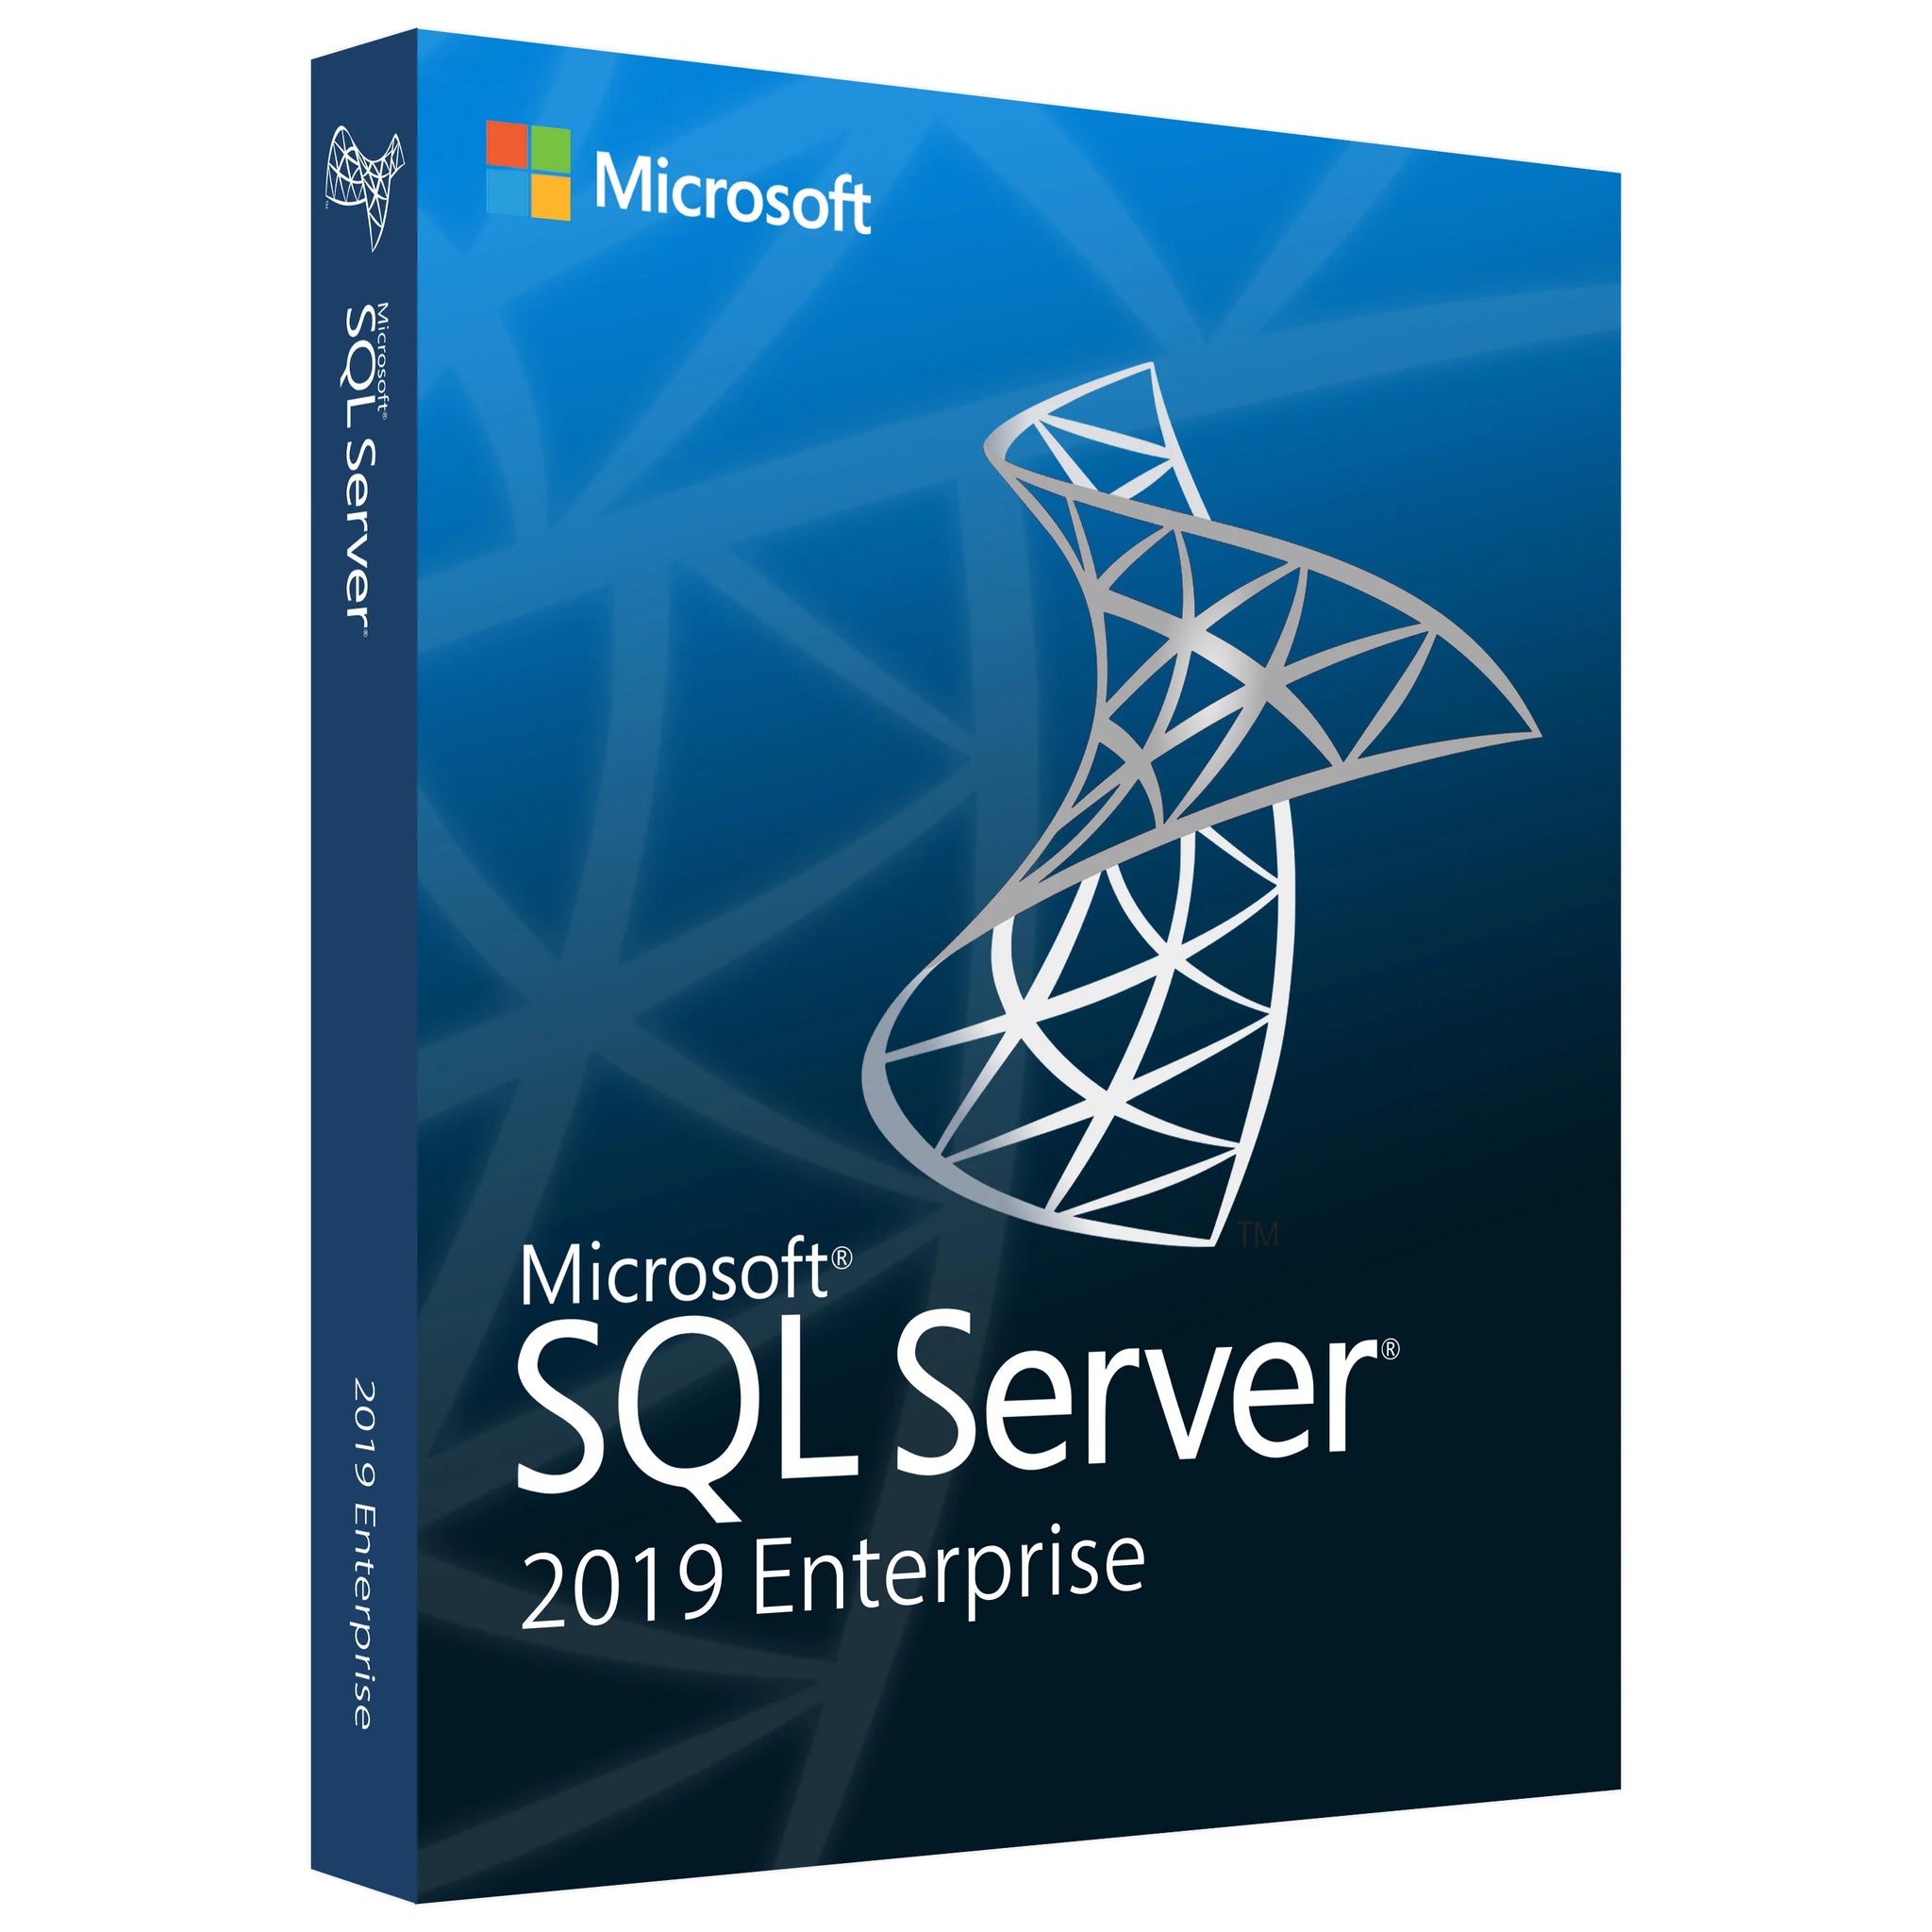 Microsoft SQL Server 2019 Enterprise- Lifetime License Key